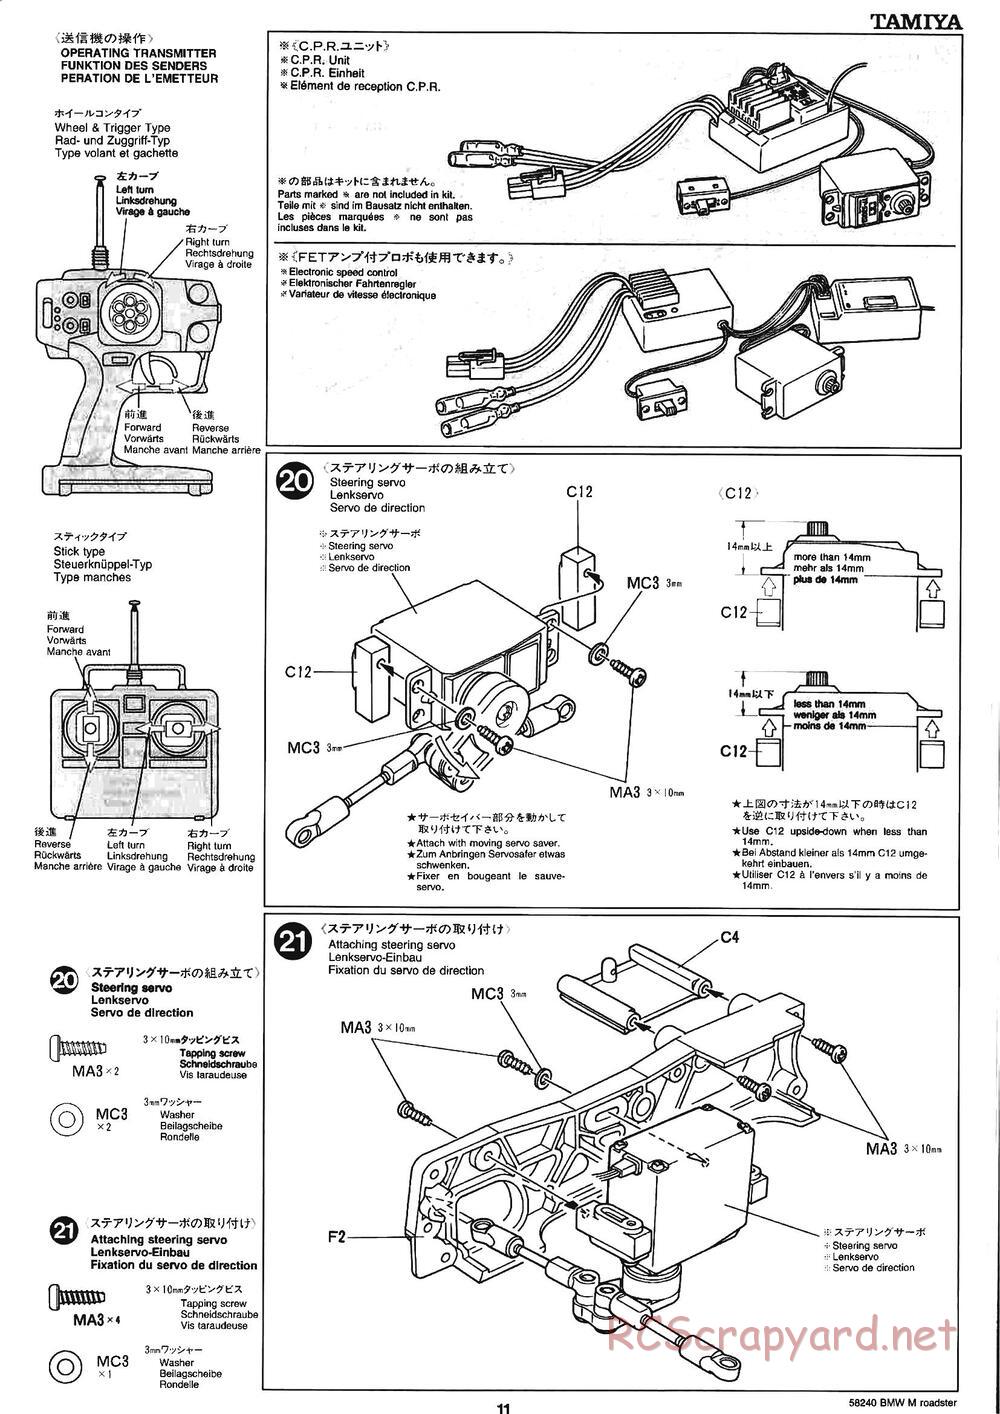 Tamiya - BMW M Roadster - M04L Chassis - Manual - Page 11